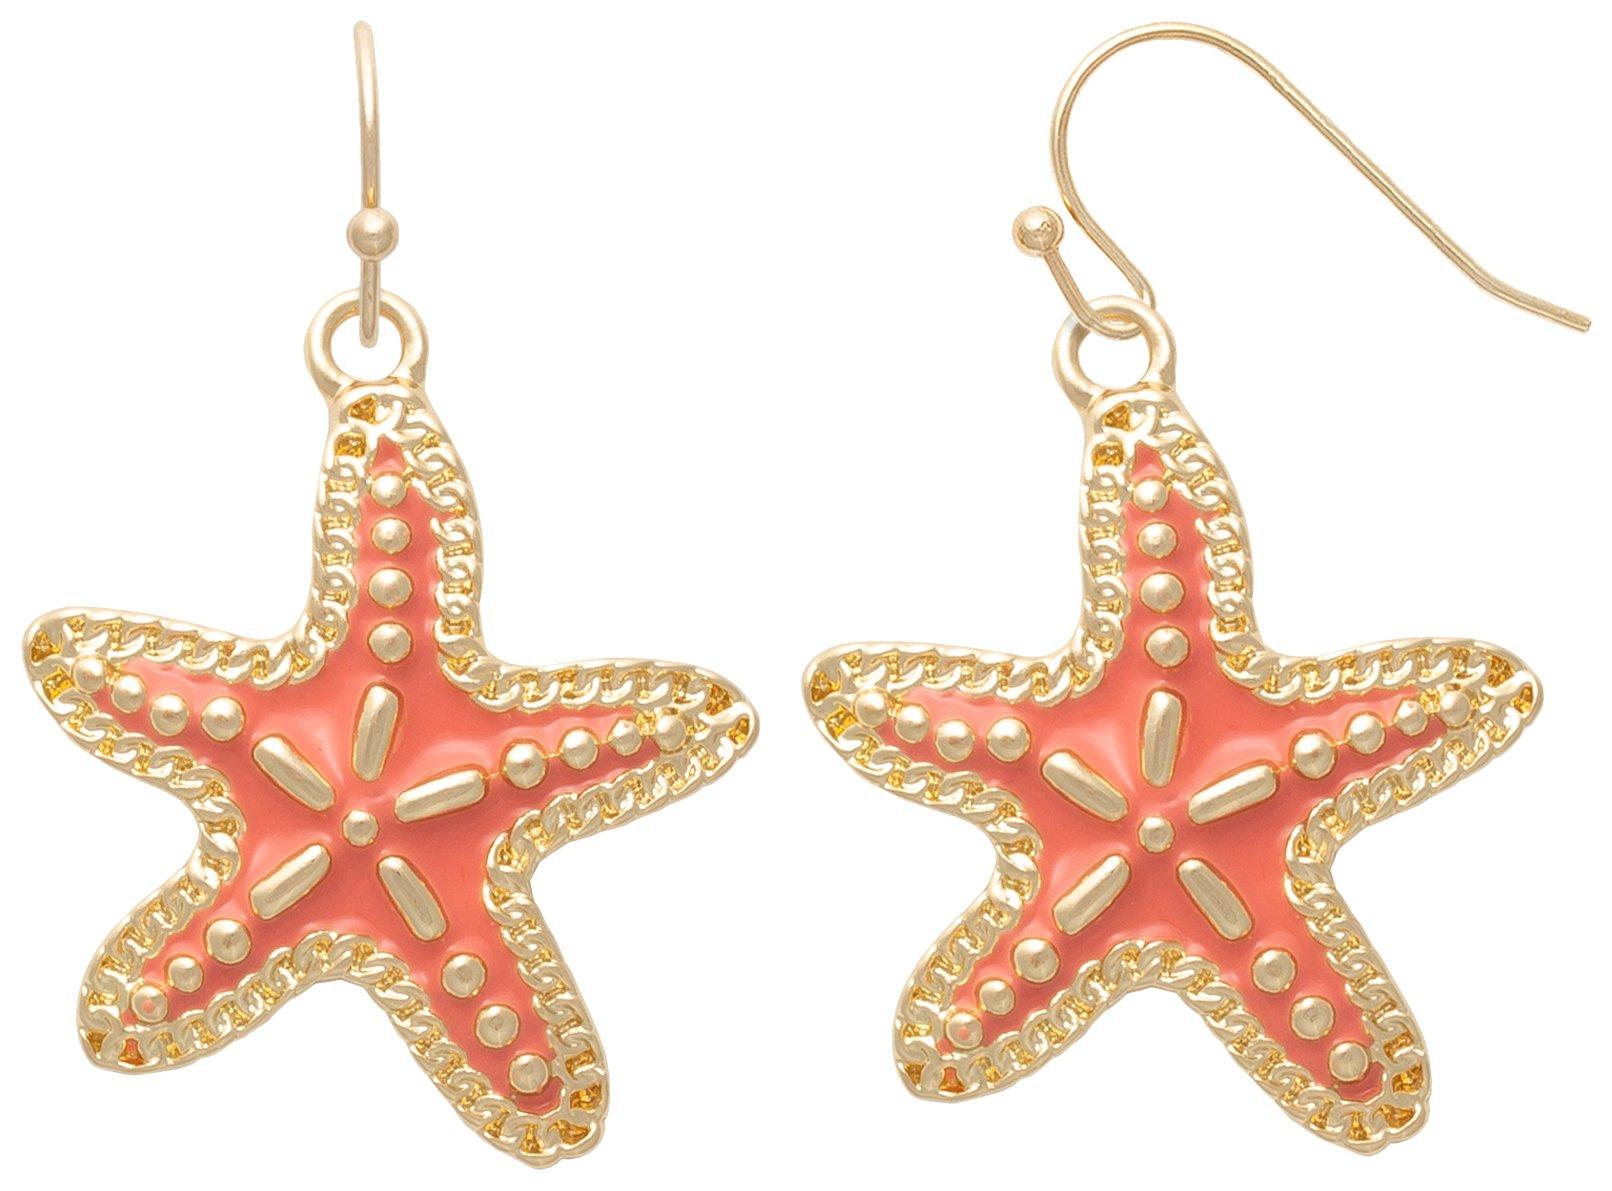 Textured Enamel Starfish Dangle Earrings